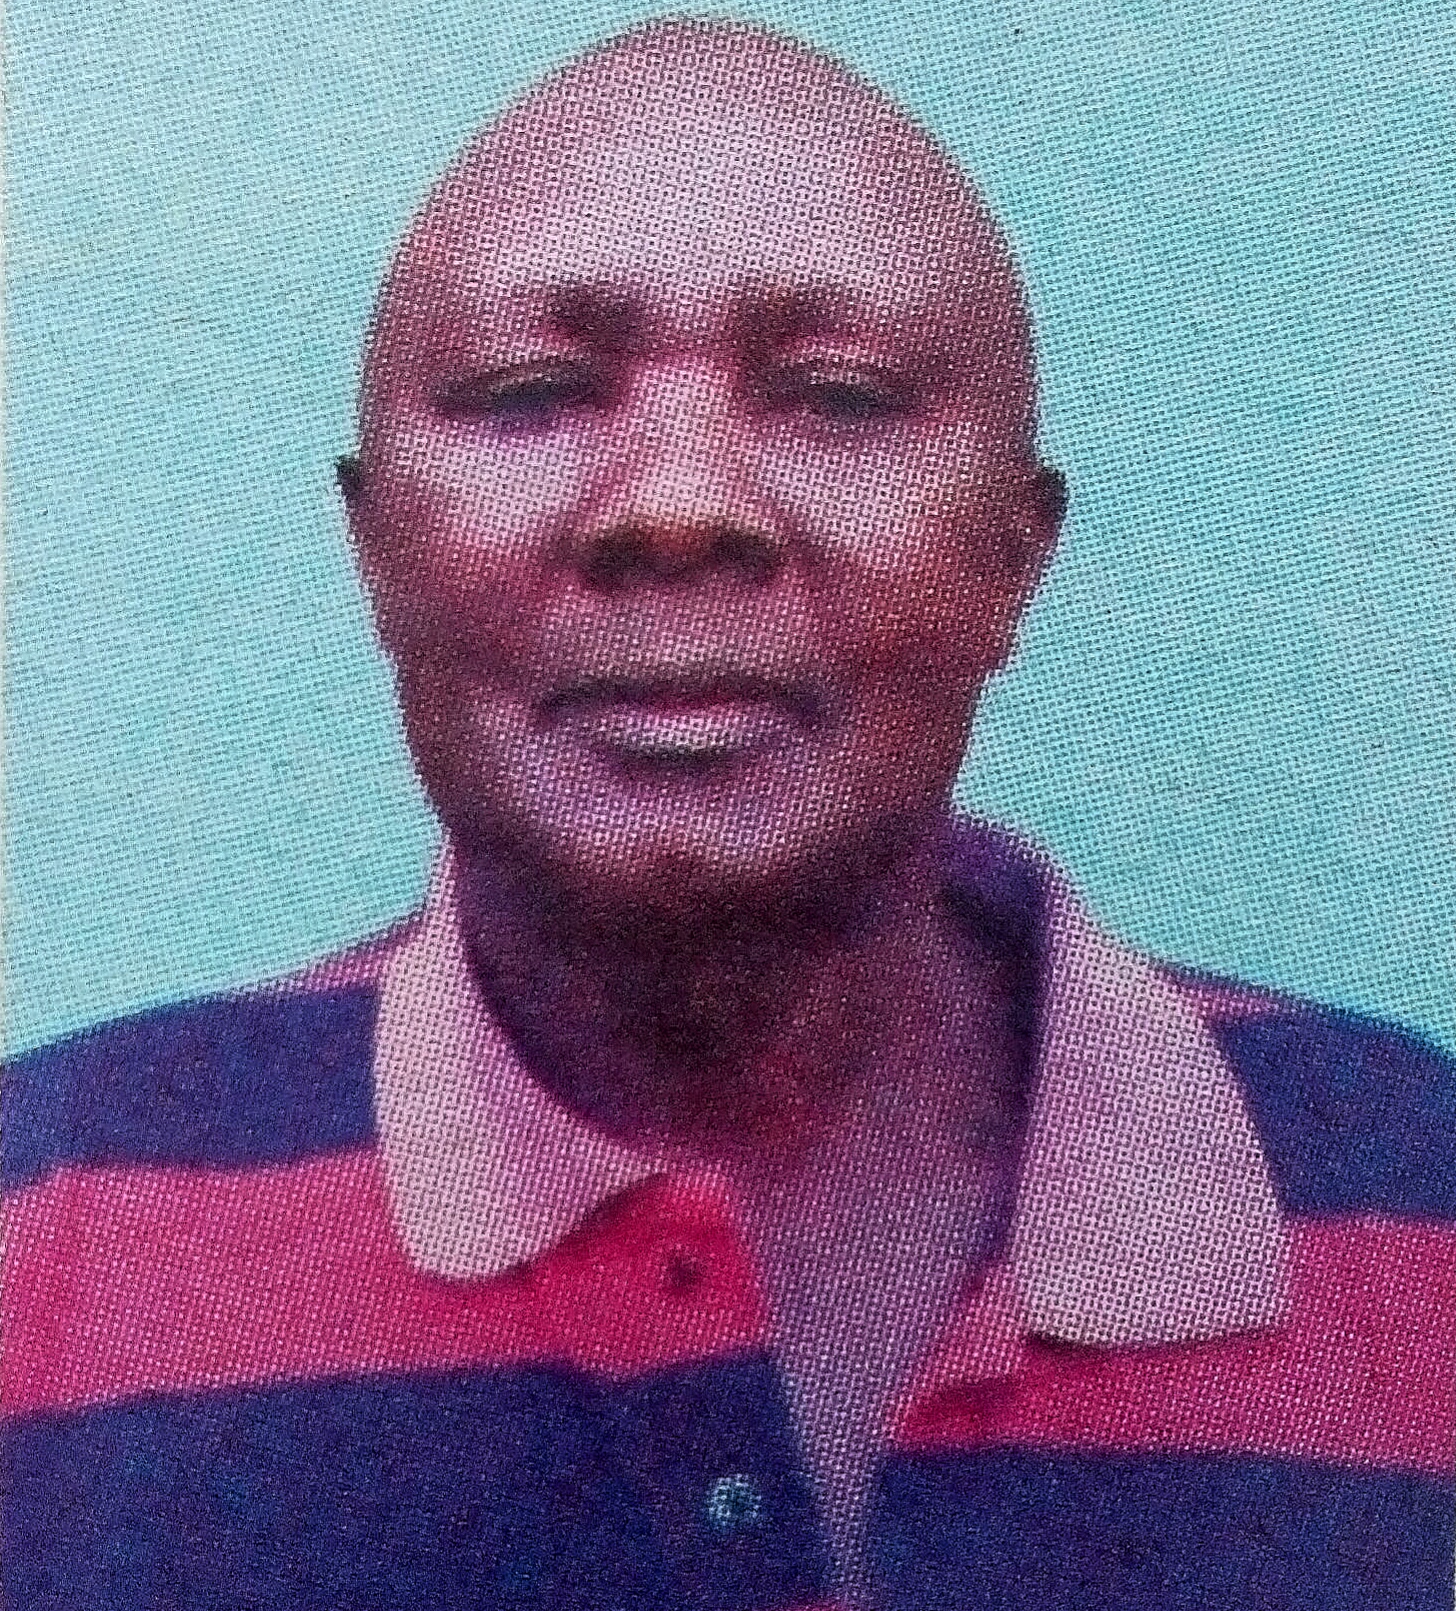 Obituary Image of David lrungu Warui (Bakari)